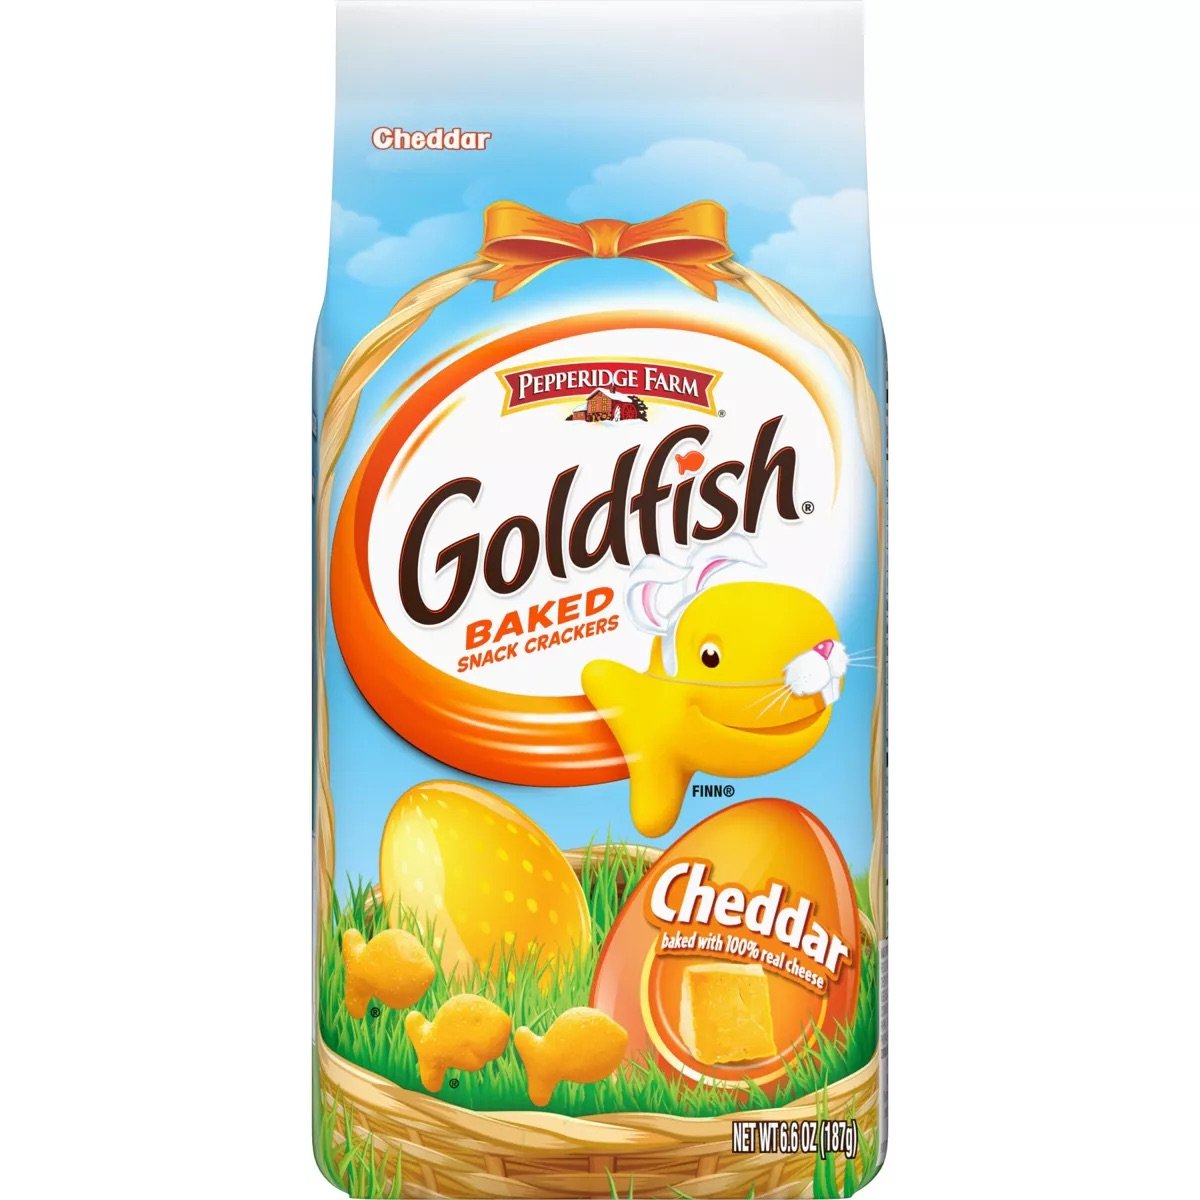 Goldfish Spring Cheddar Crackers.jpeg